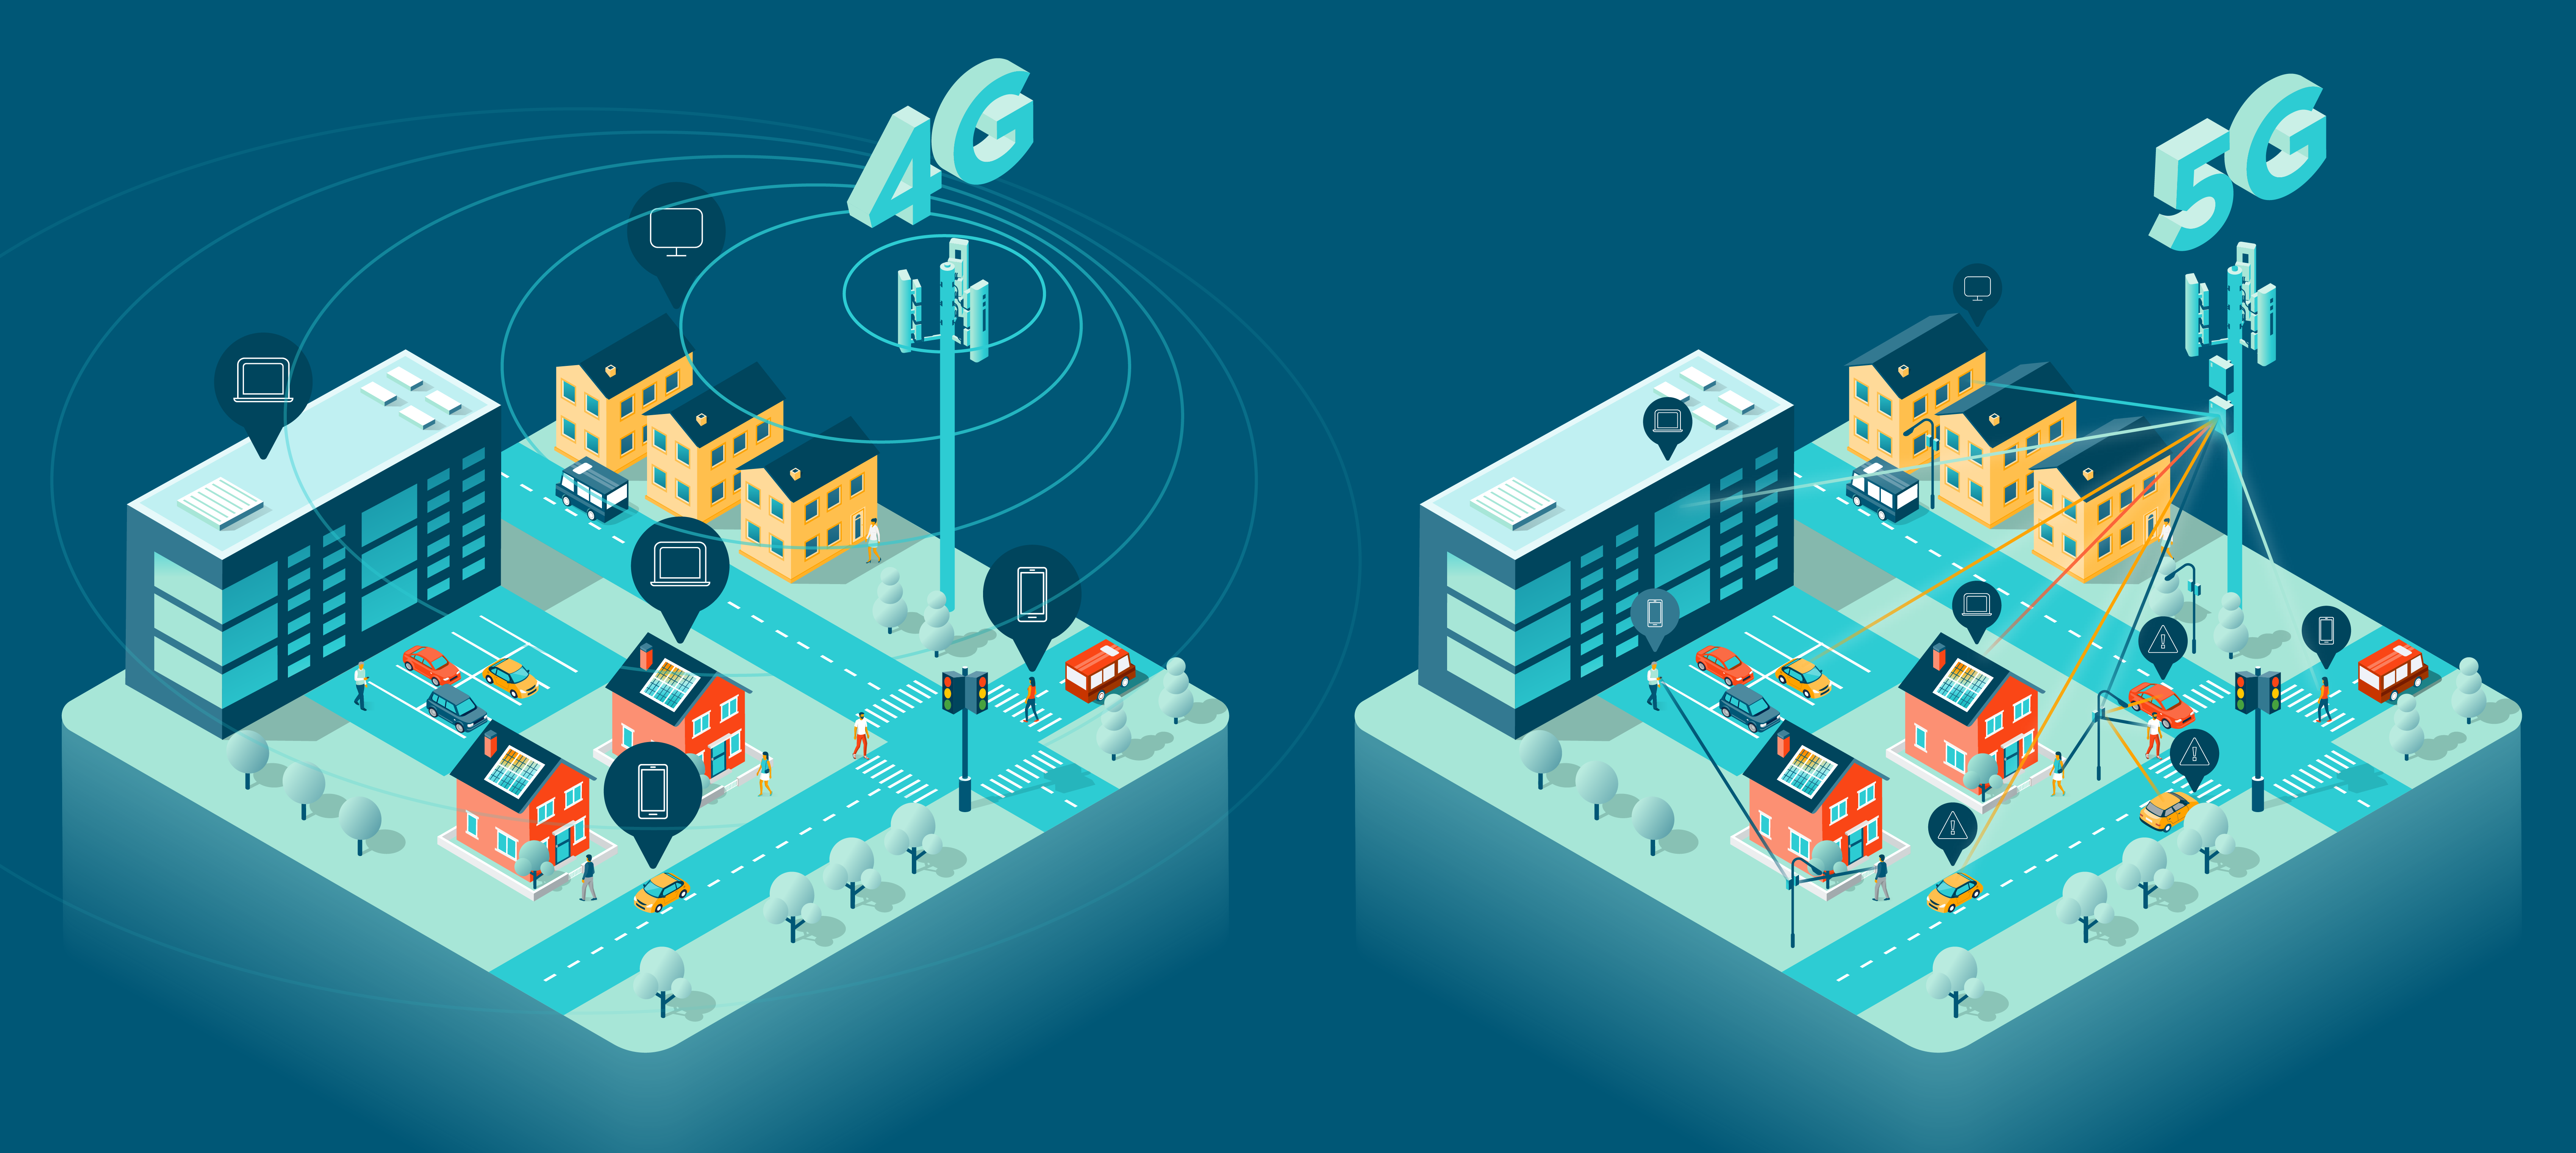 5G新无线电信息图，4G网络基站相比5G城市安装有源定向天线。